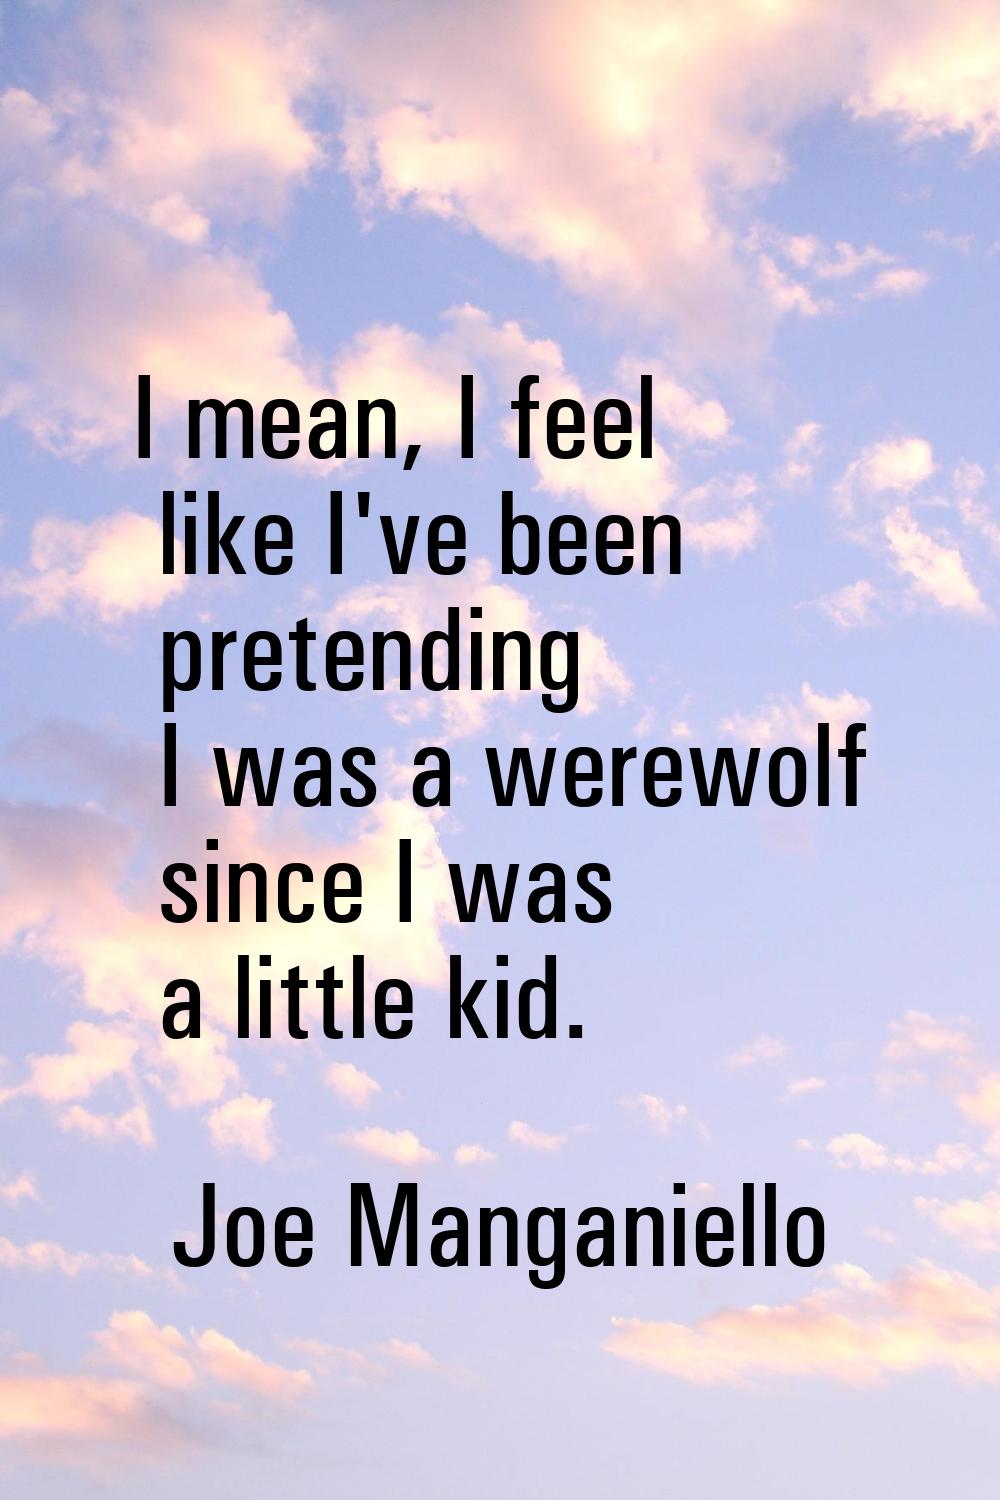 I mean, I feel like I've been pretending I was a werewolf since I was a little kid.